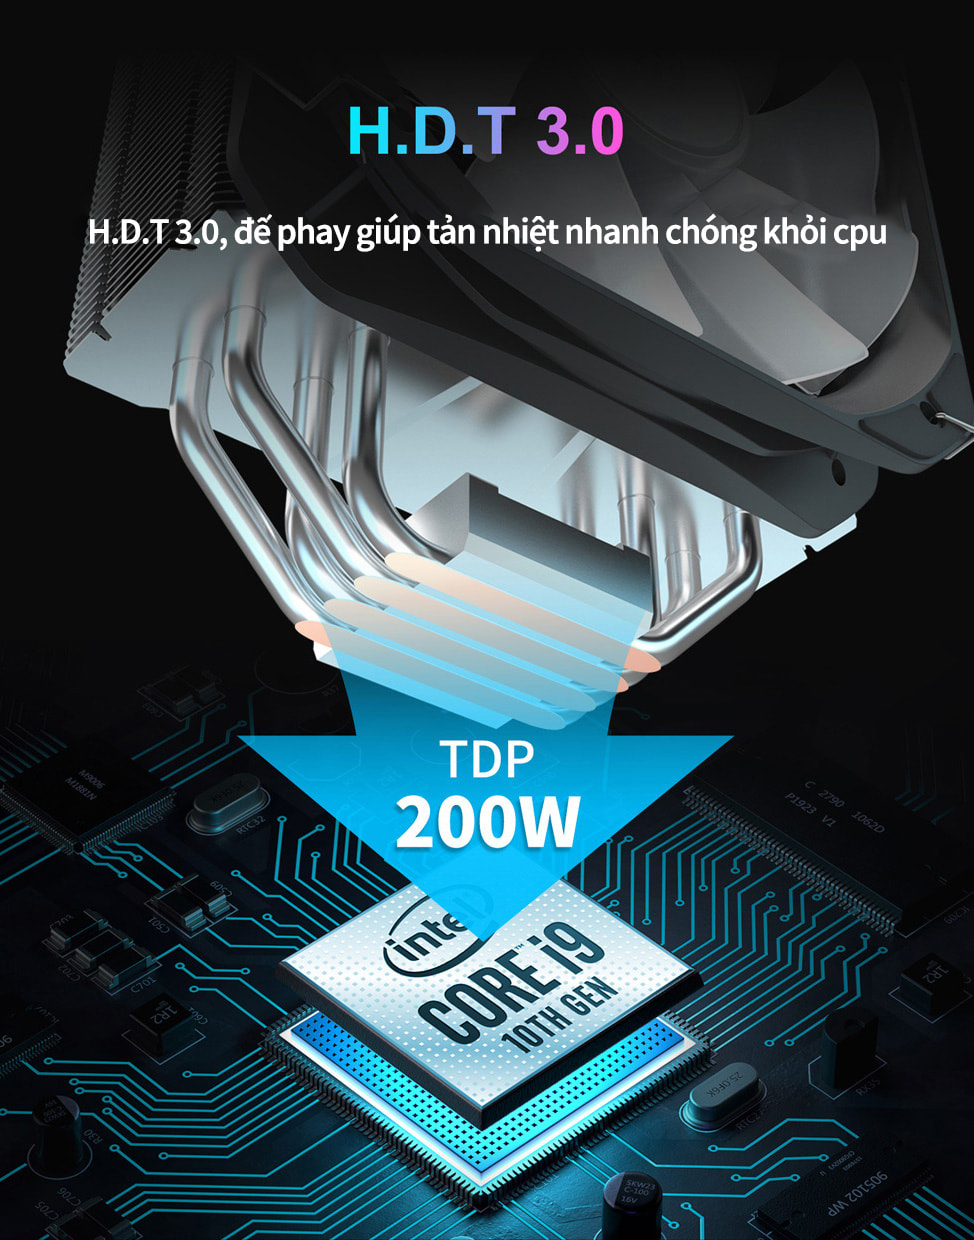 Review Tan Nhiet Khi PC Cooler Paladin 400 ARGB